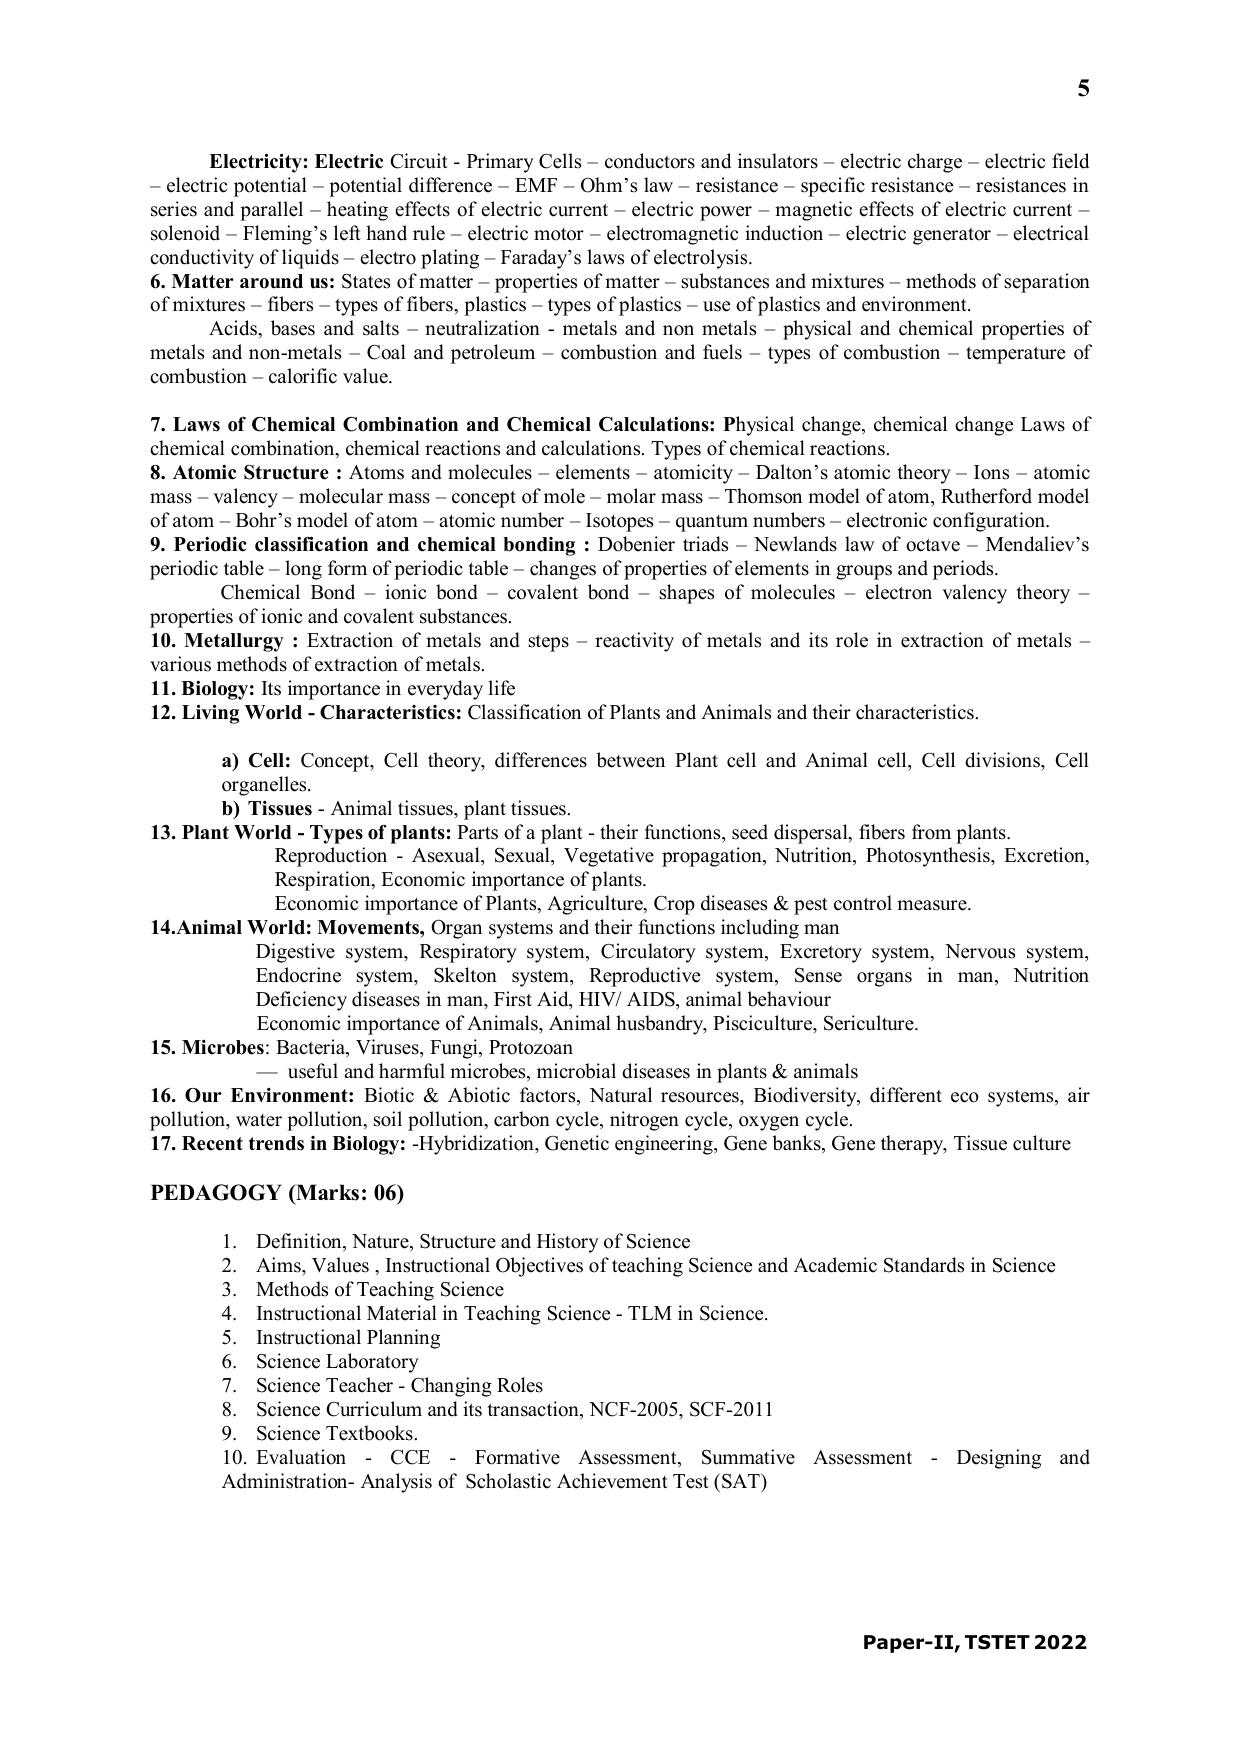 TS TET Syllabus for Paper 2 (Kannada) - Page 5